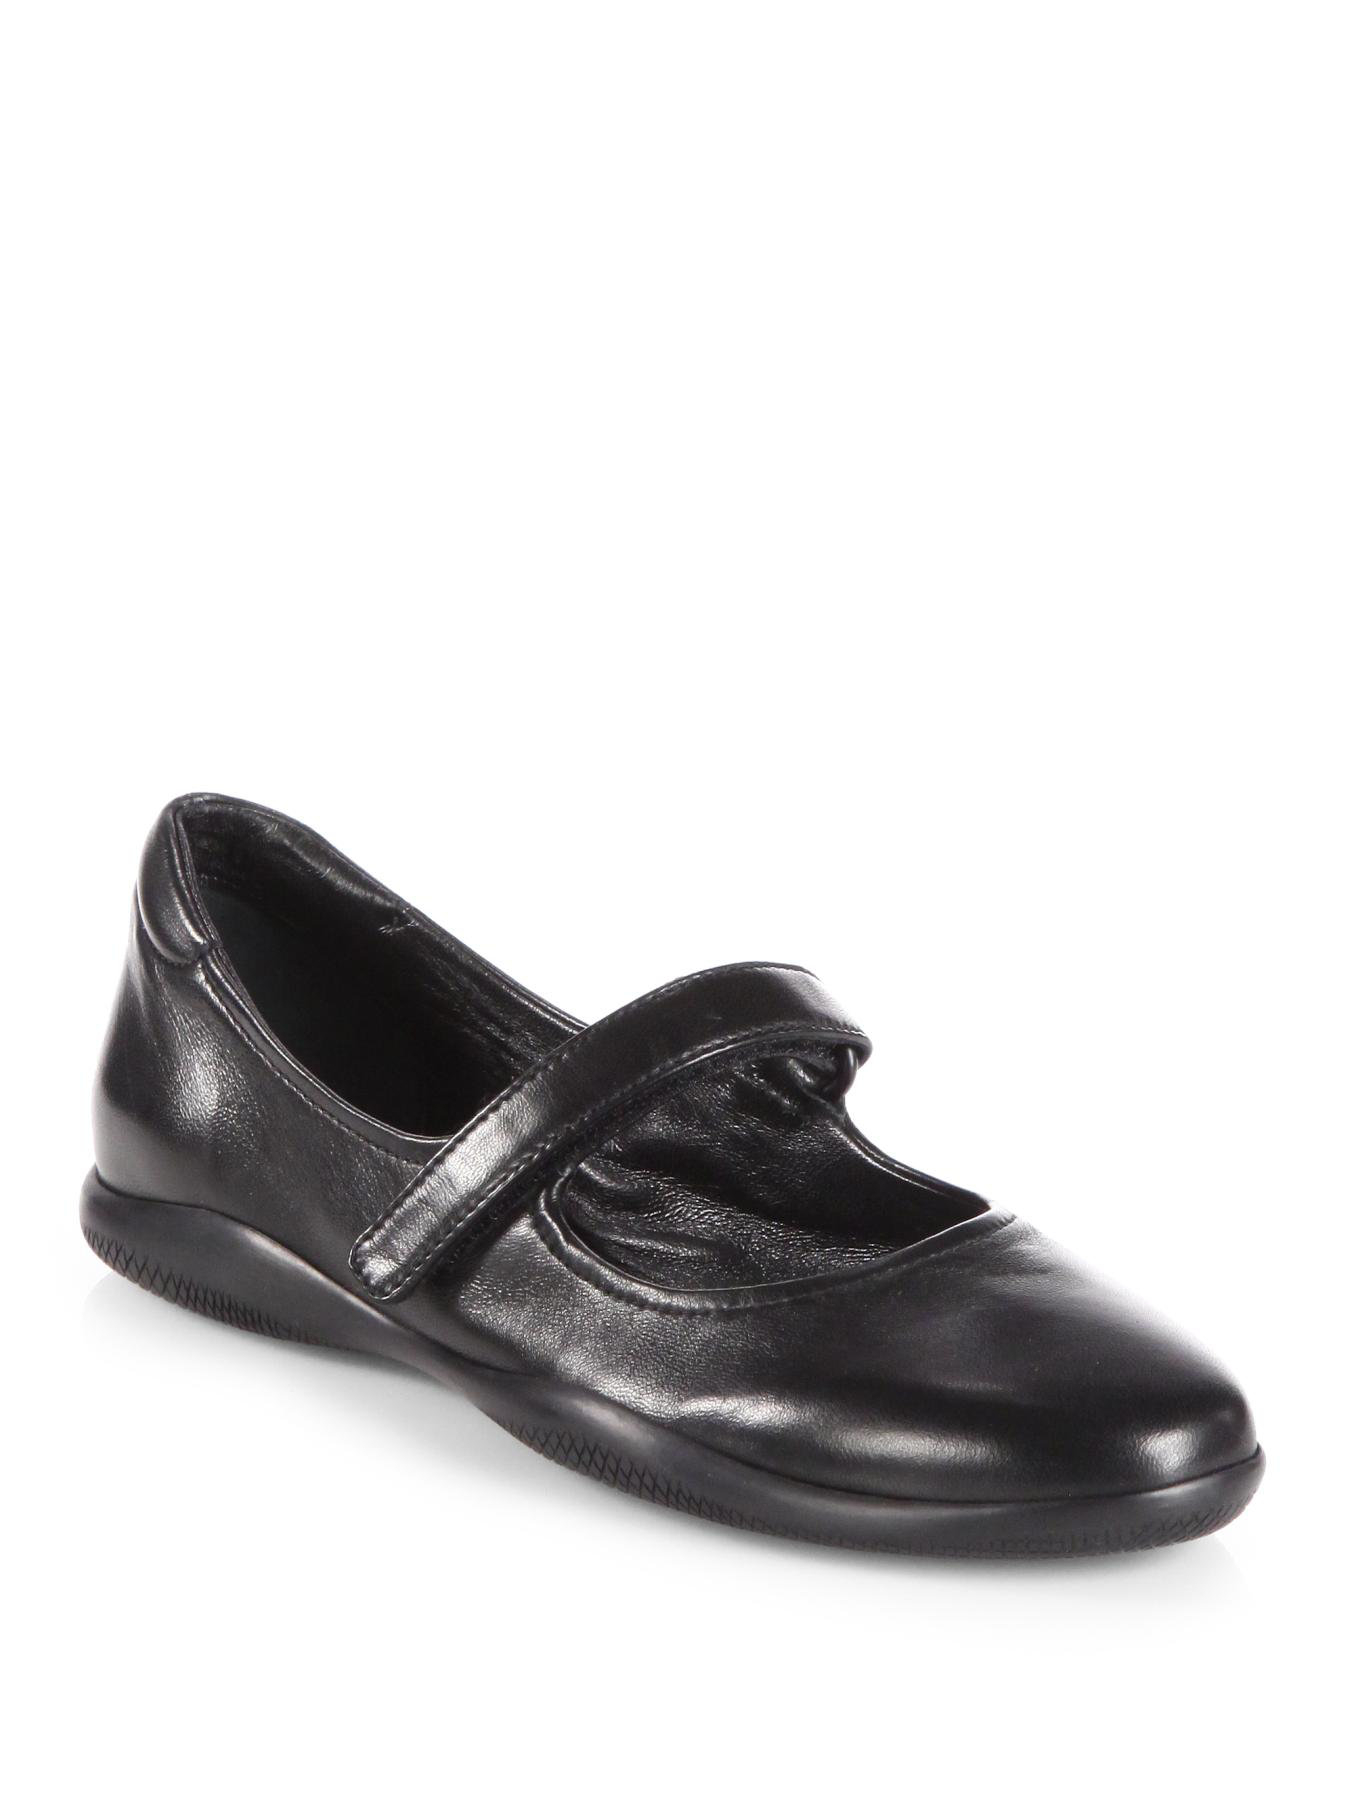 Prada Mary Jane Leather Flats in Black (nero-black) | Lyst